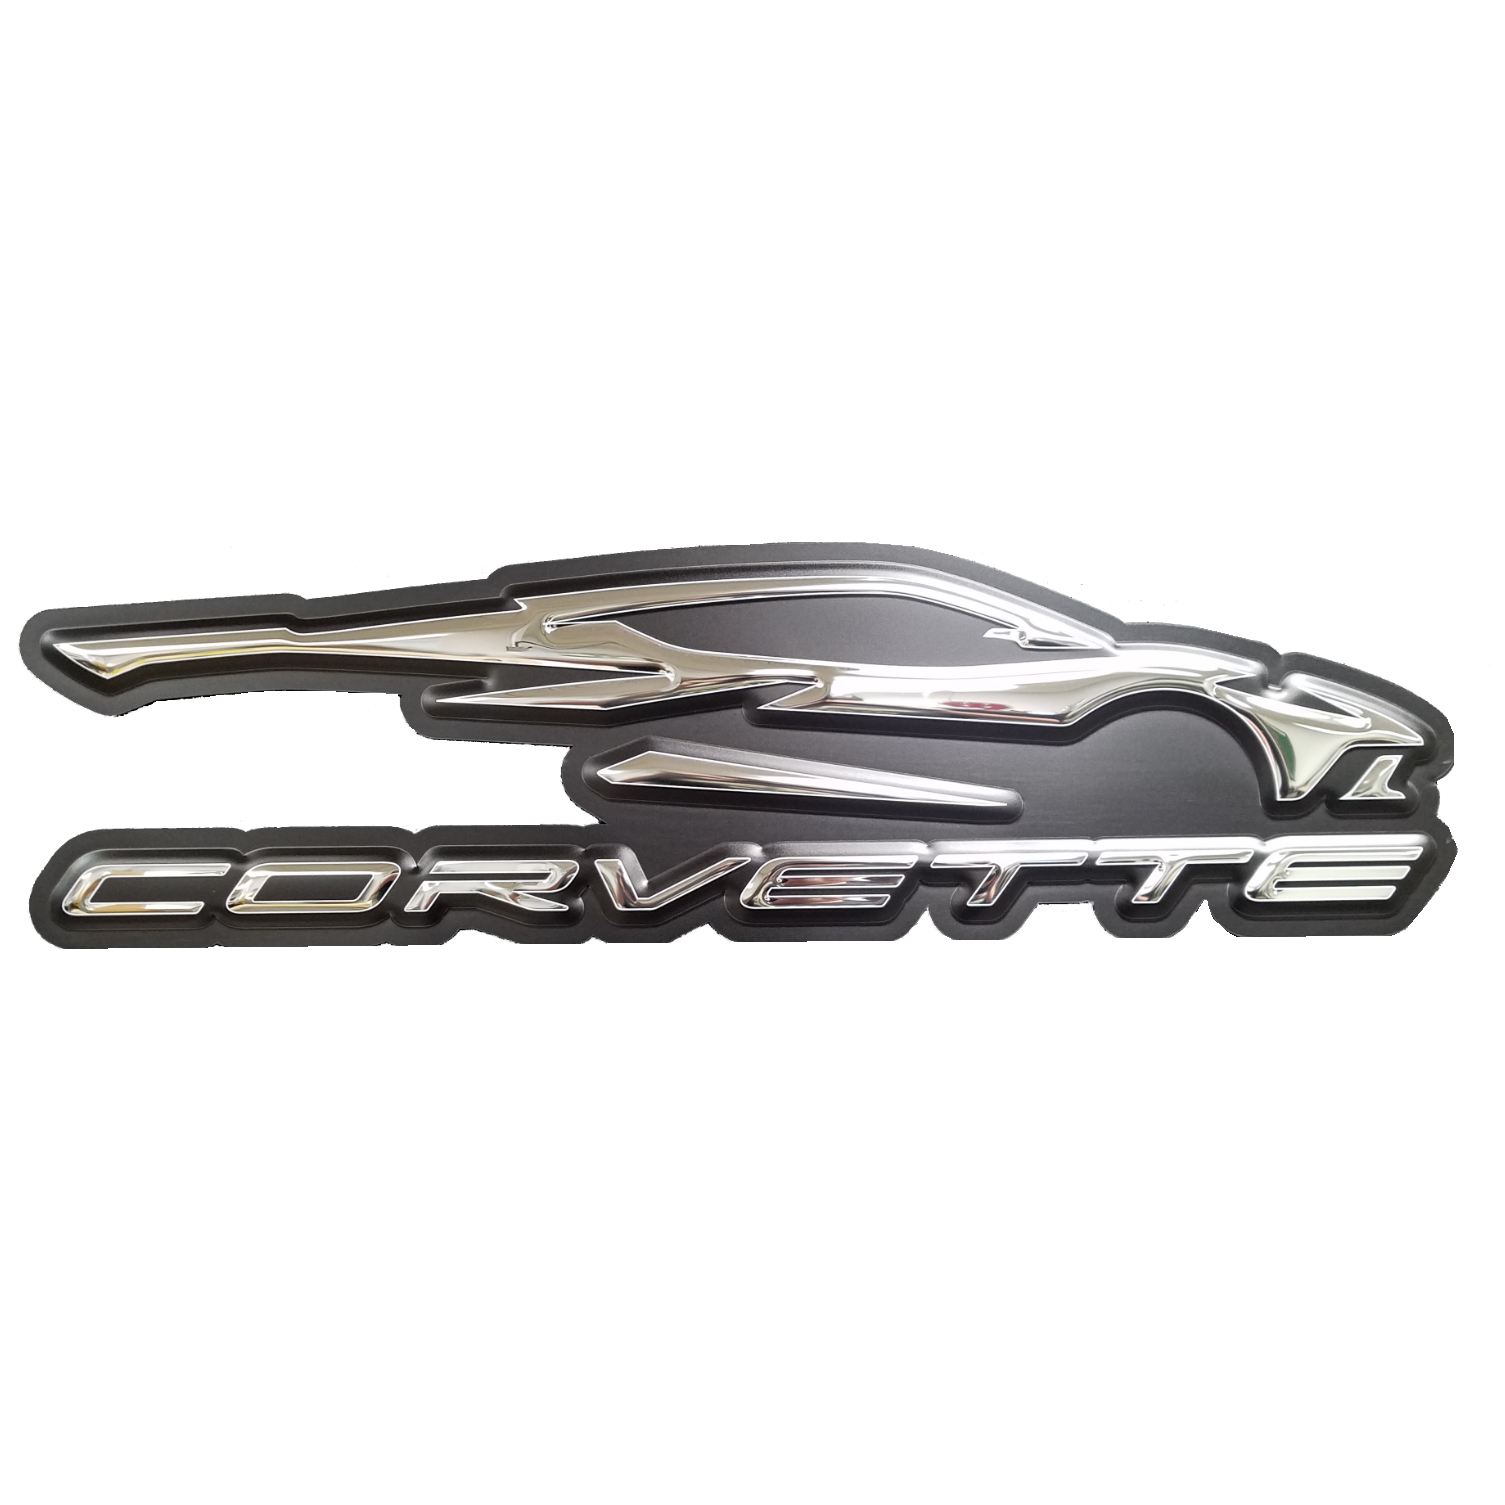 Corvette Gesture Metal Wall Sign - 8